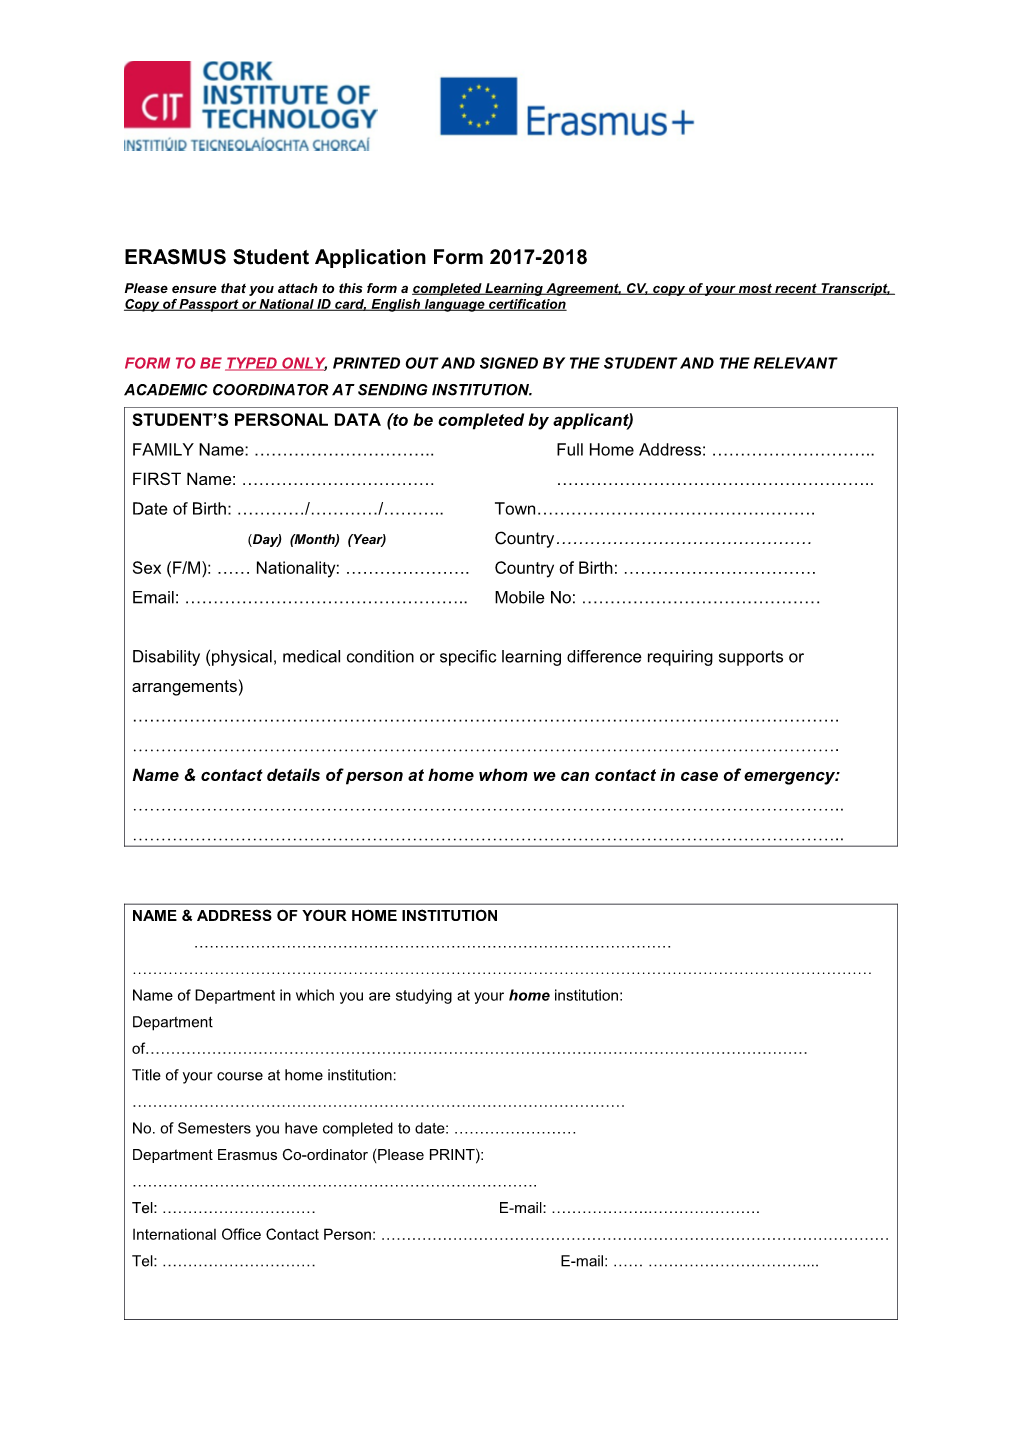 ERASMUS Student Application Form 2017-2018